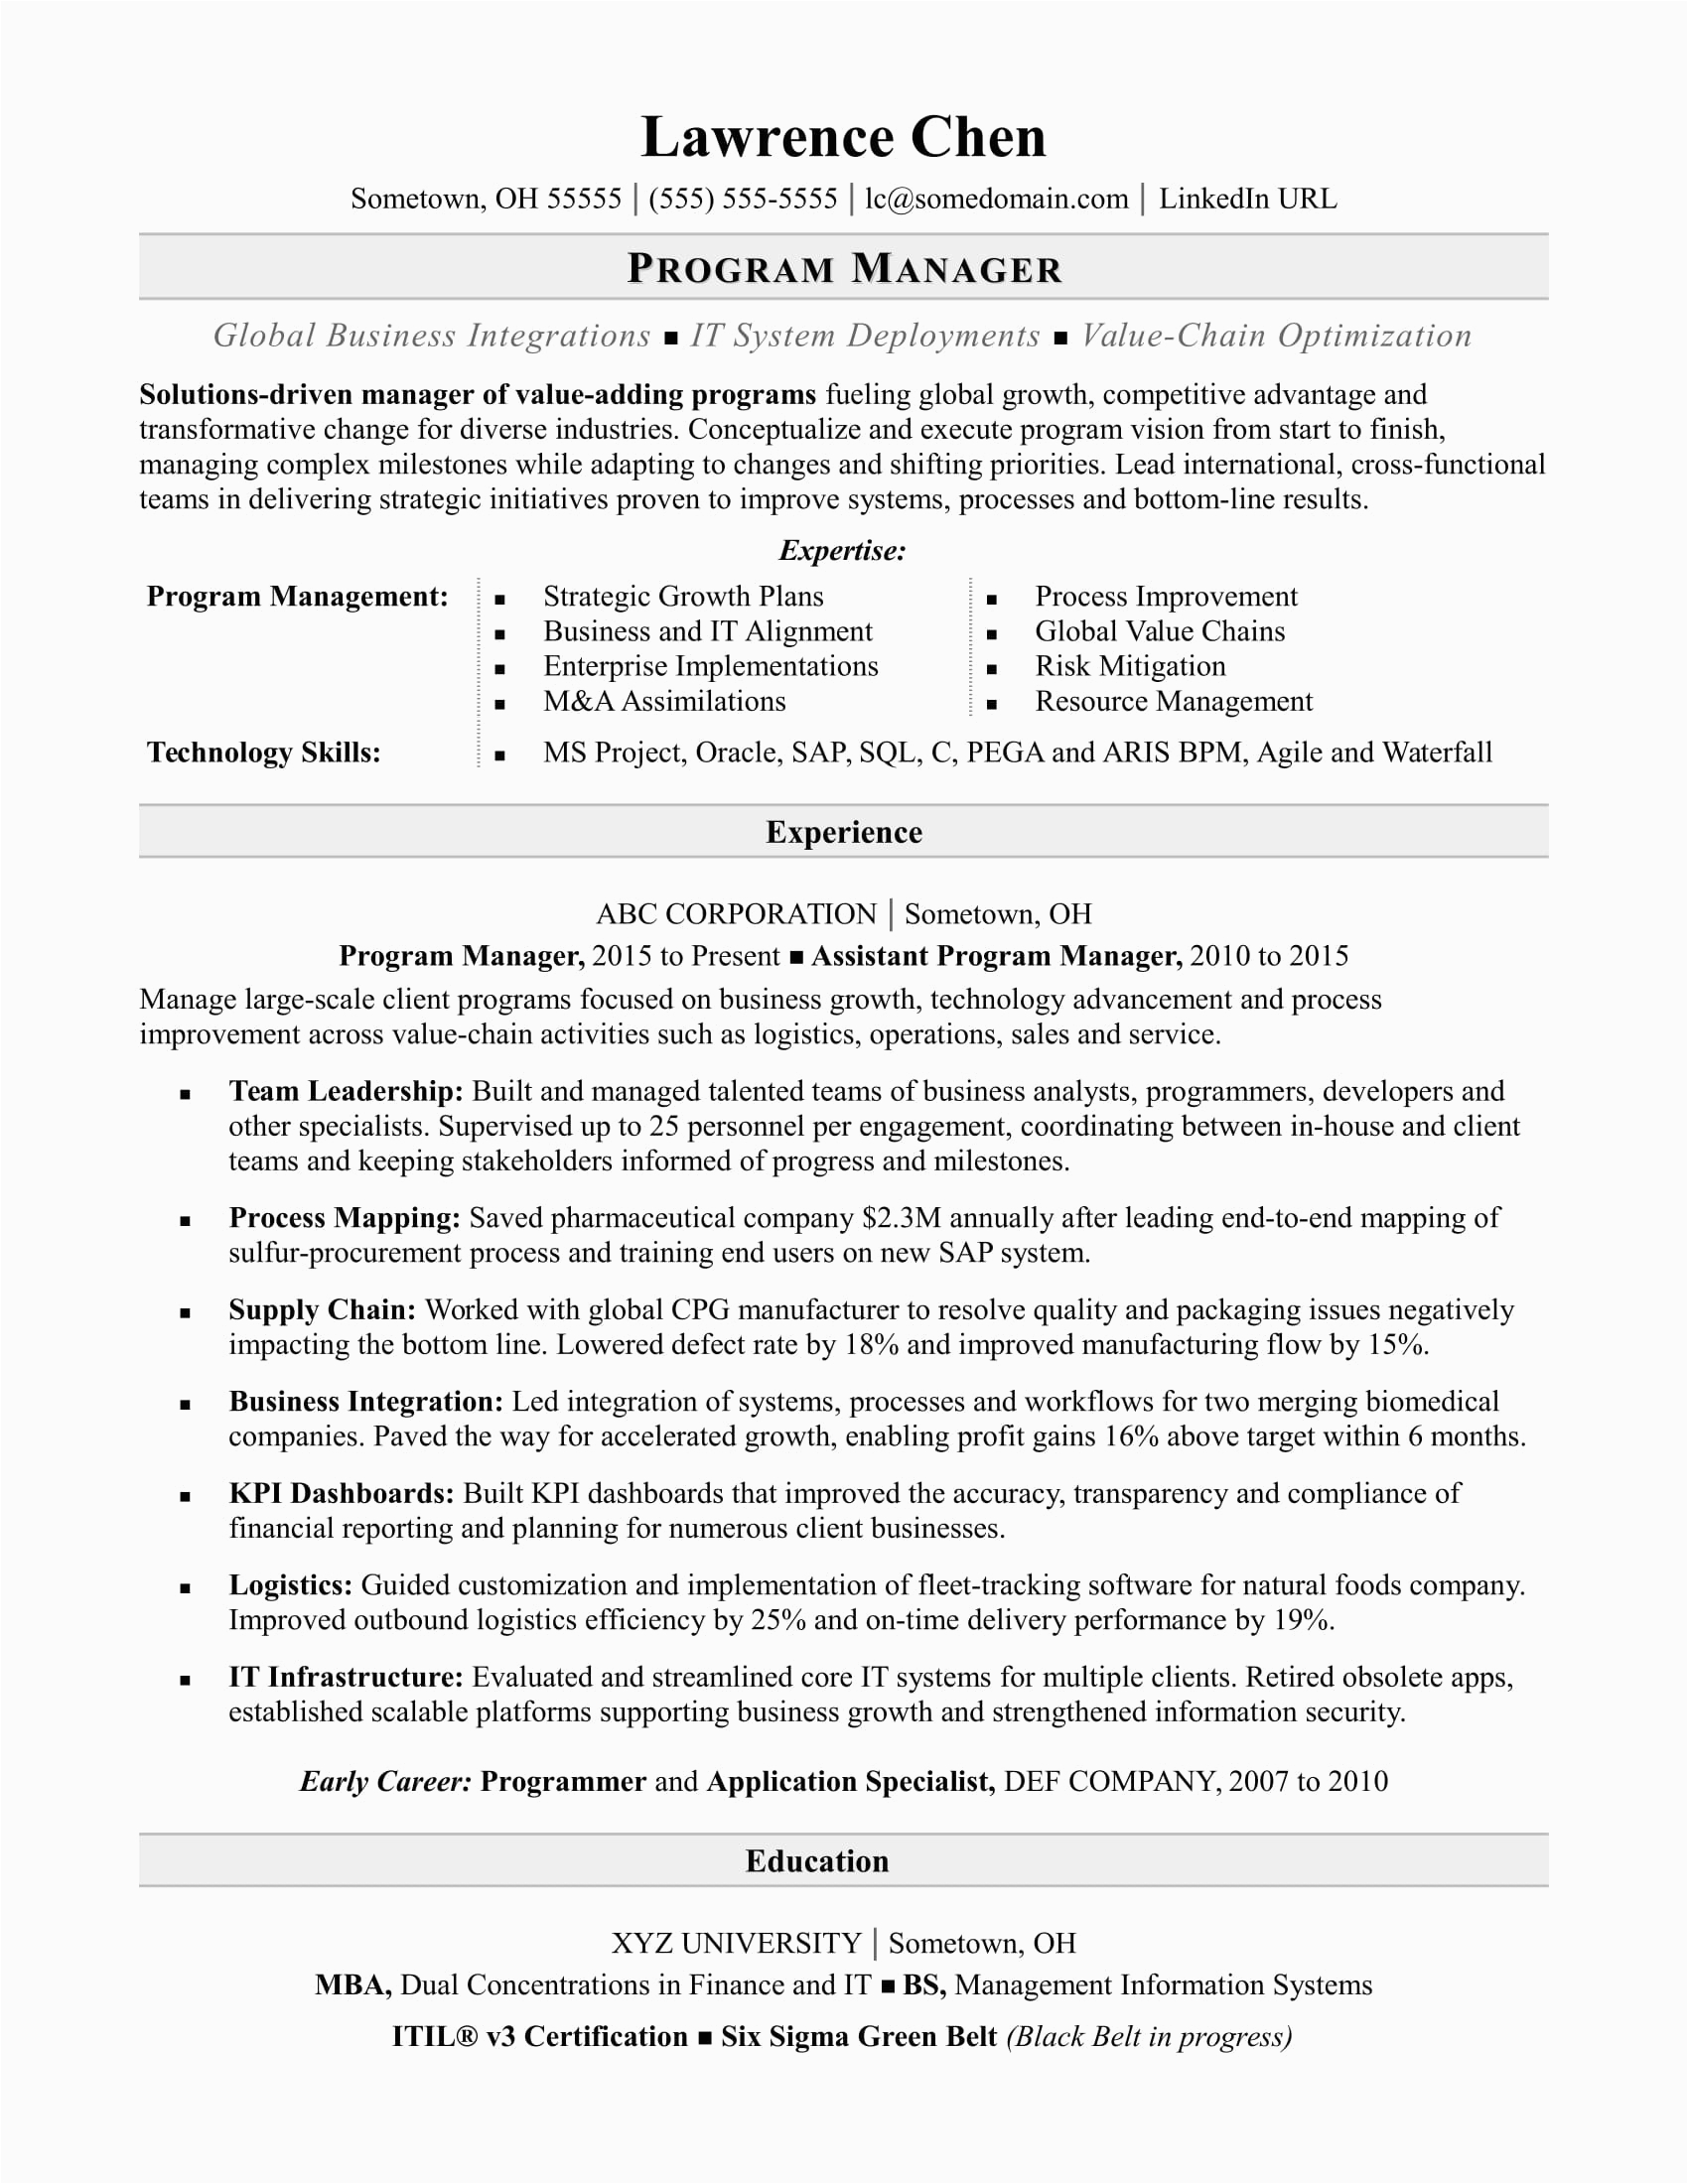 Sample Professional Resume It Manager Position Program Manager Resume